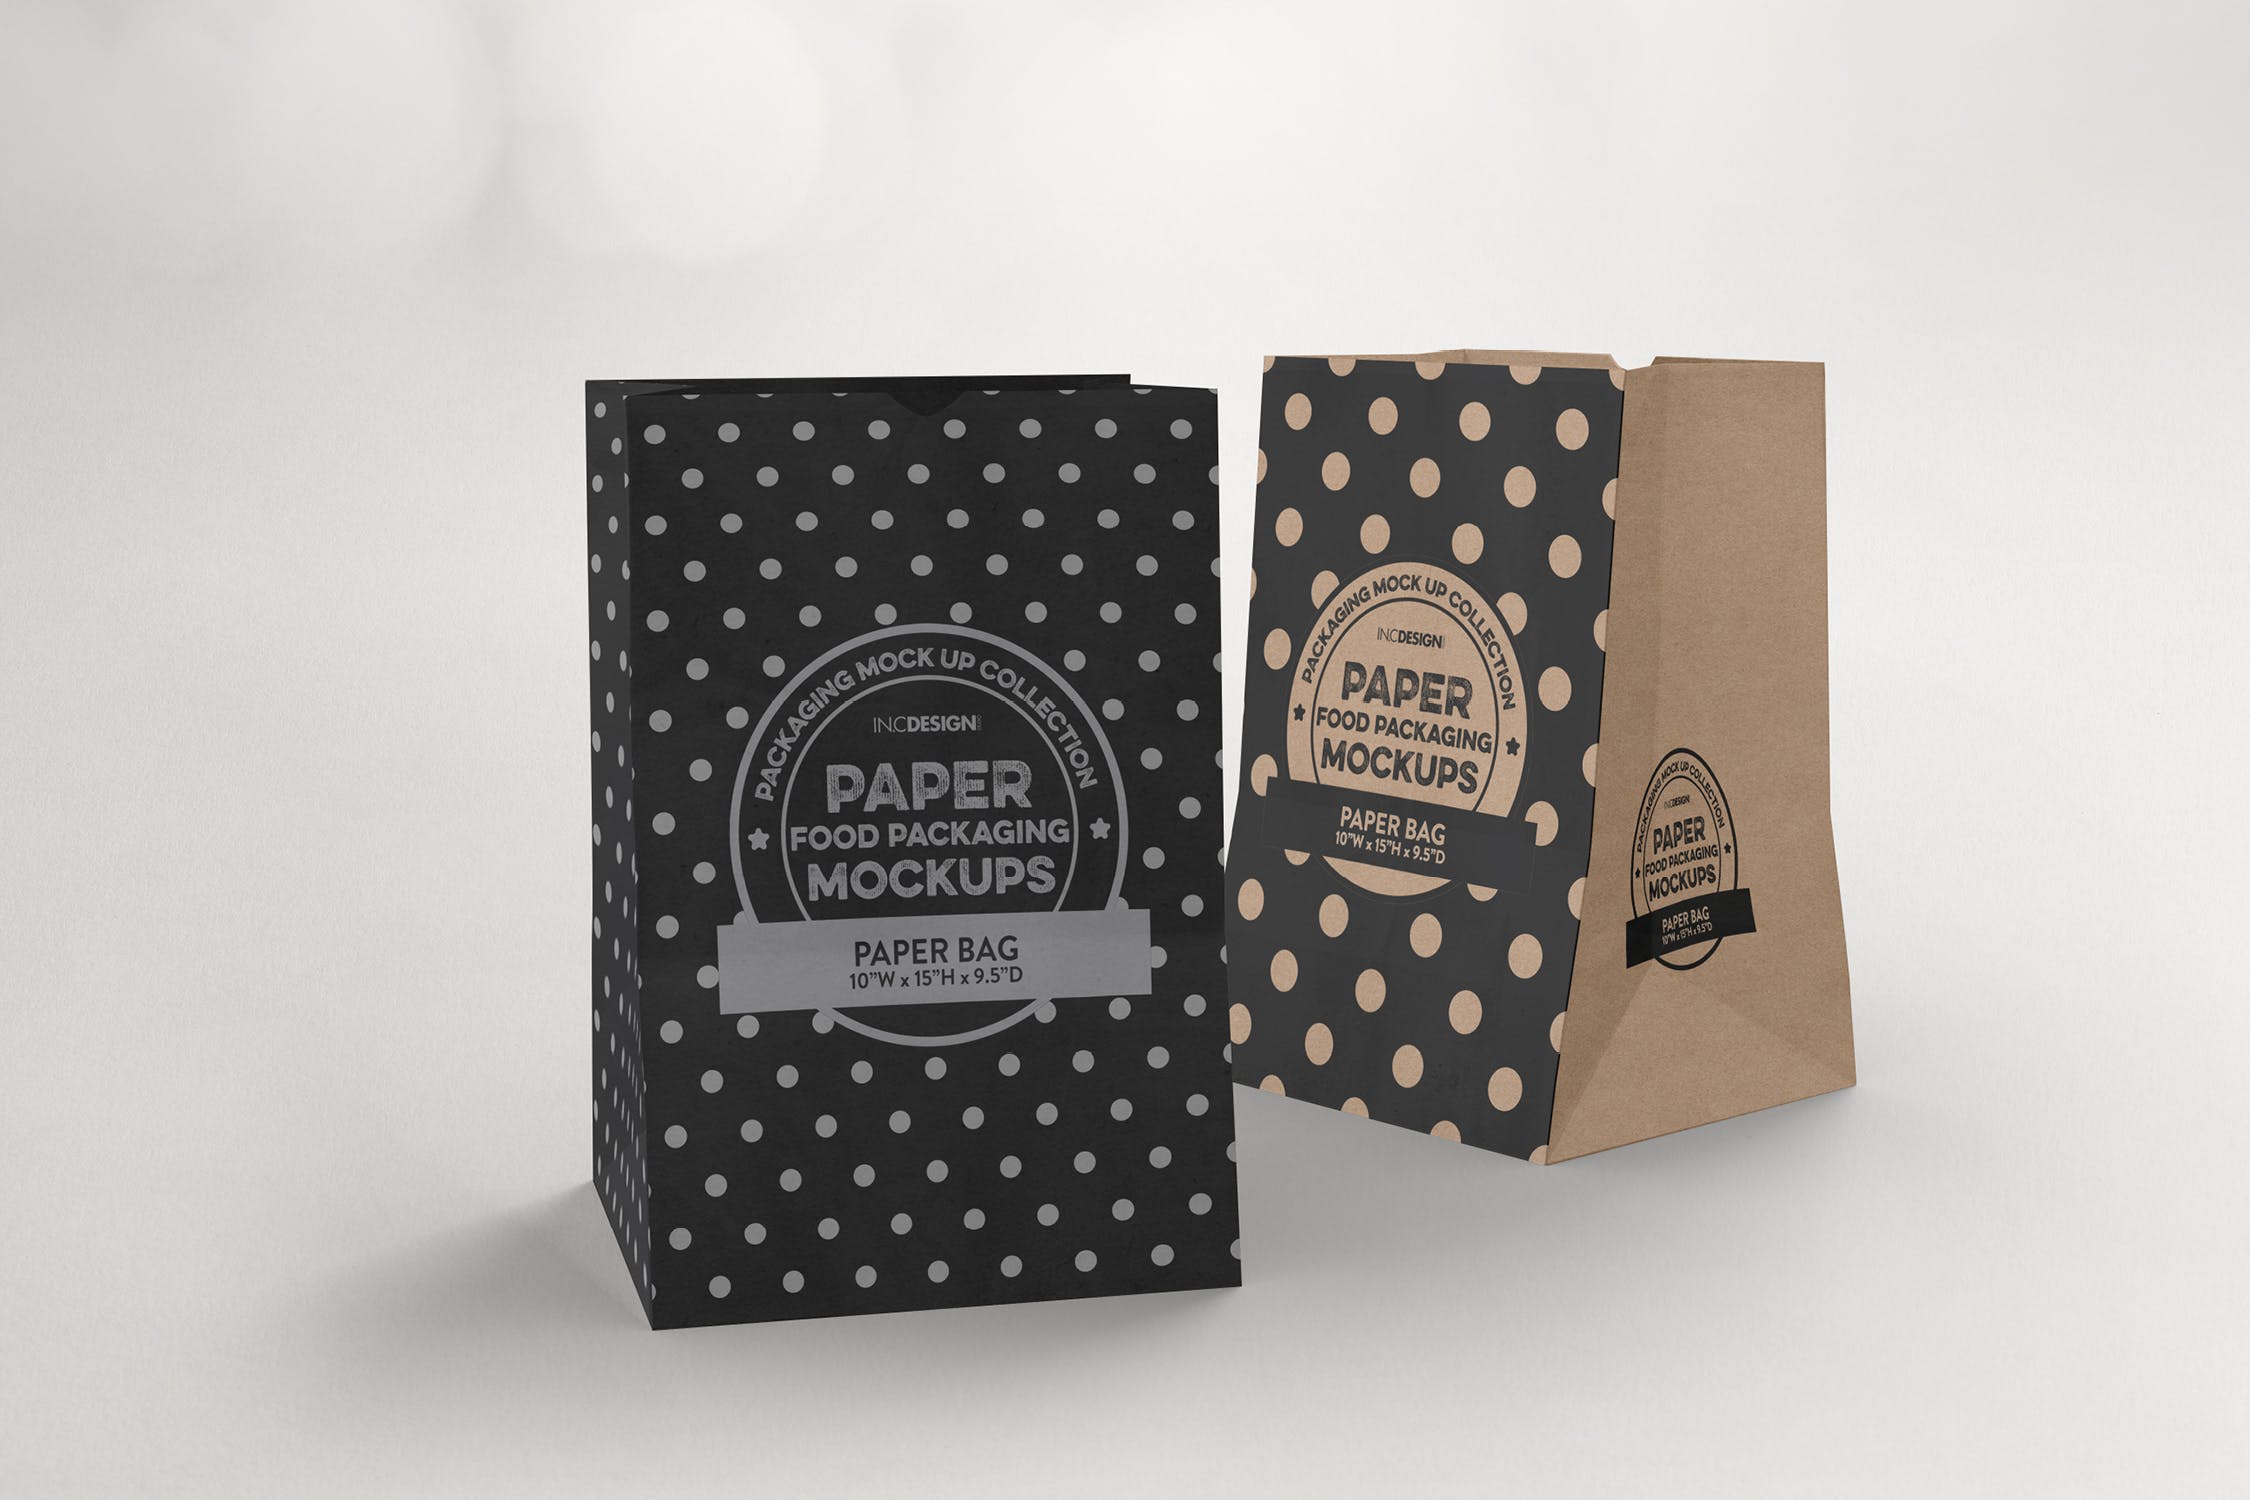 杂货纸袋包装设计效果图普贤居精选 Grocery Paper Bags Packaging Mockup插图(2)